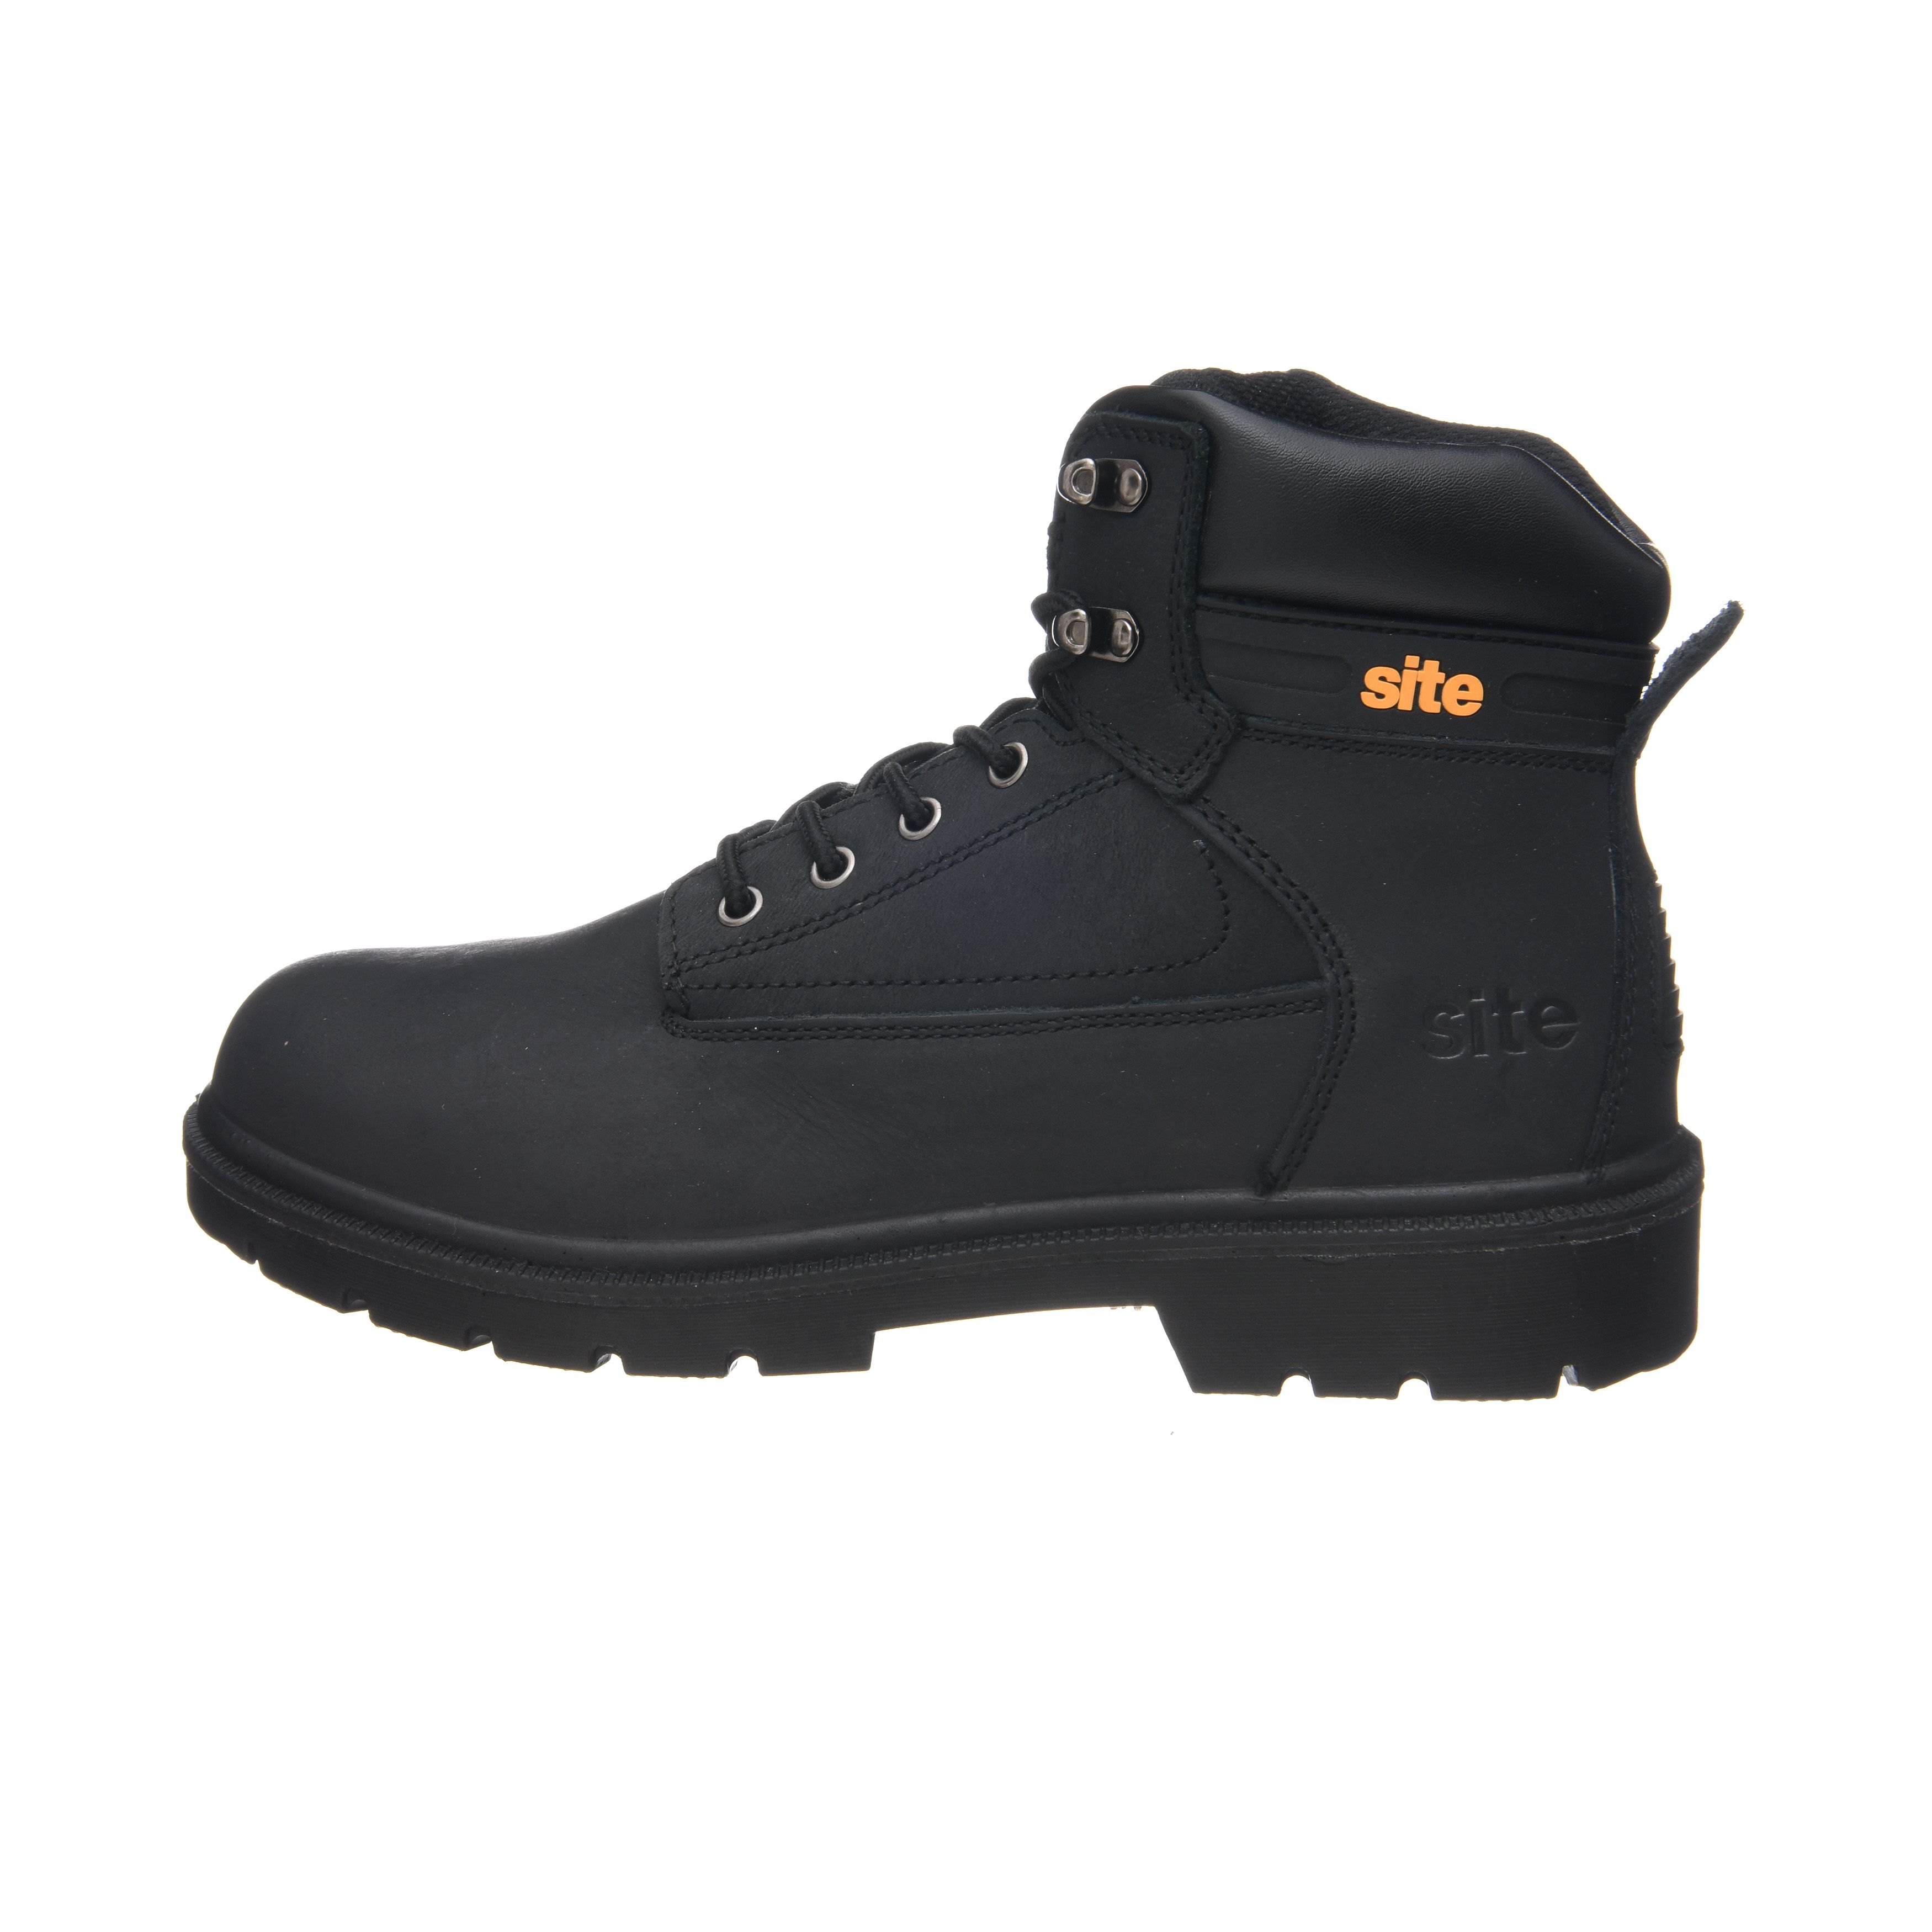 Men's Black Safety boots, Size 9